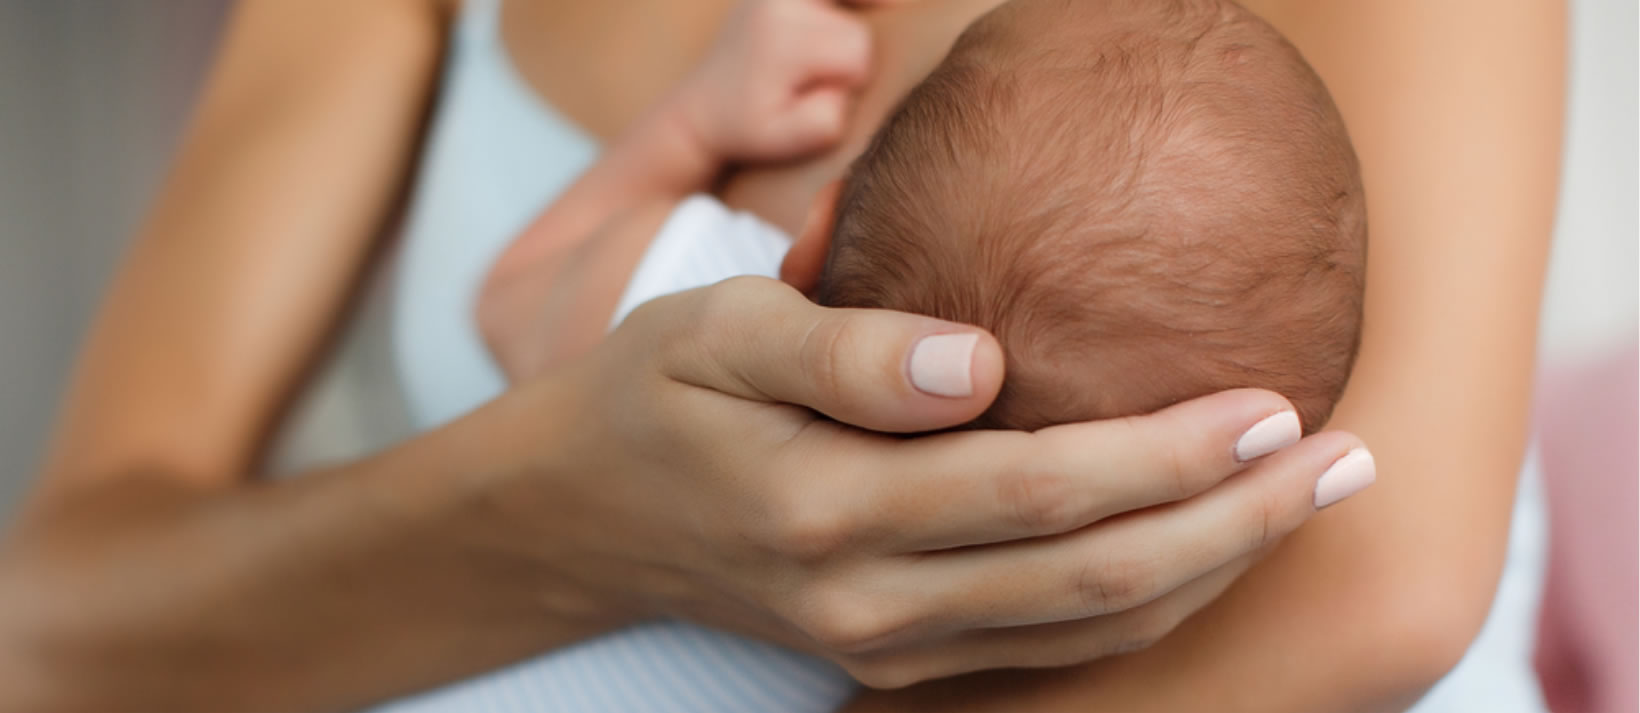 Breastfeeding newborns